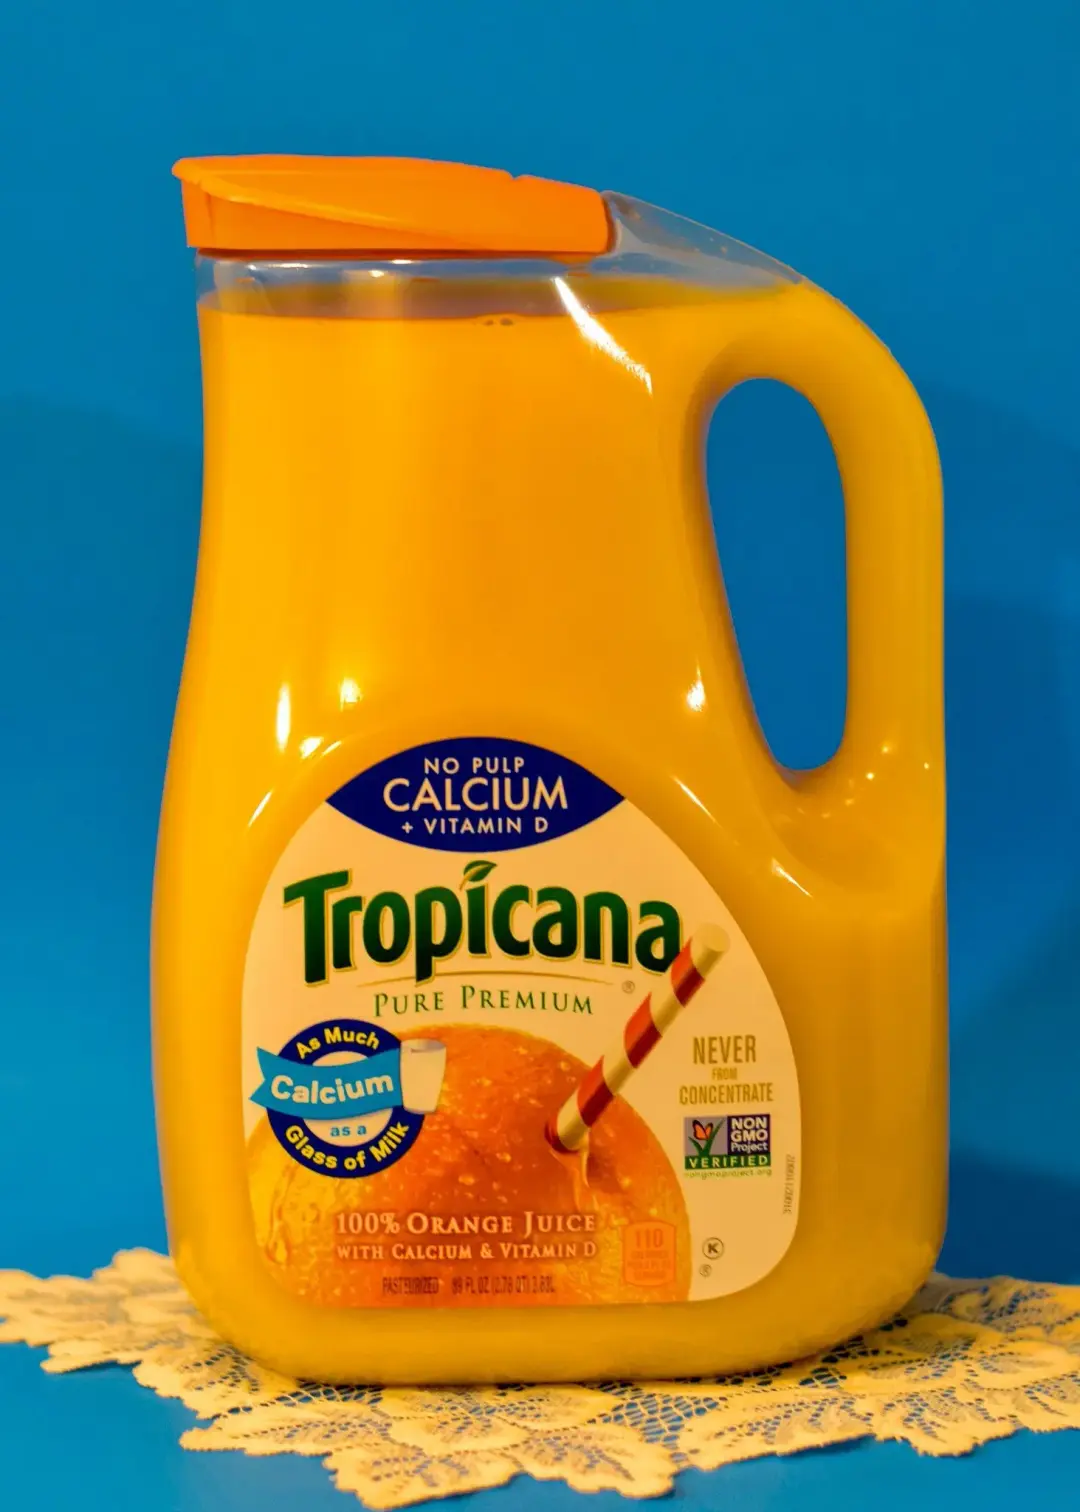 Is Tropicana Really 100 Orange Juice